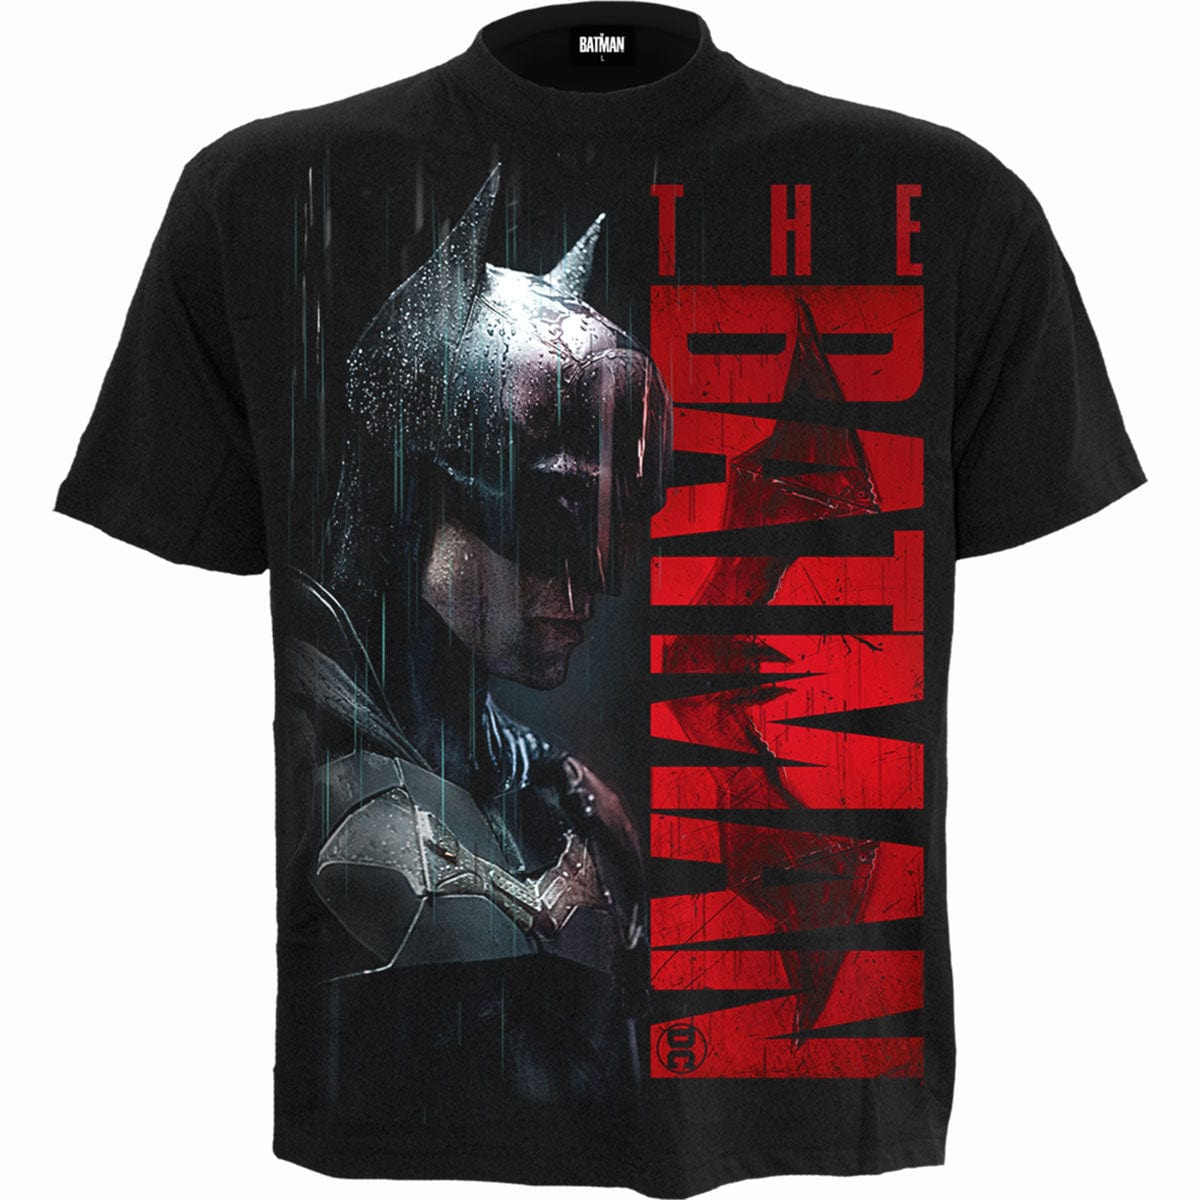 THE BATMAN - RAINING VENGEANCE - T-Shirt Black